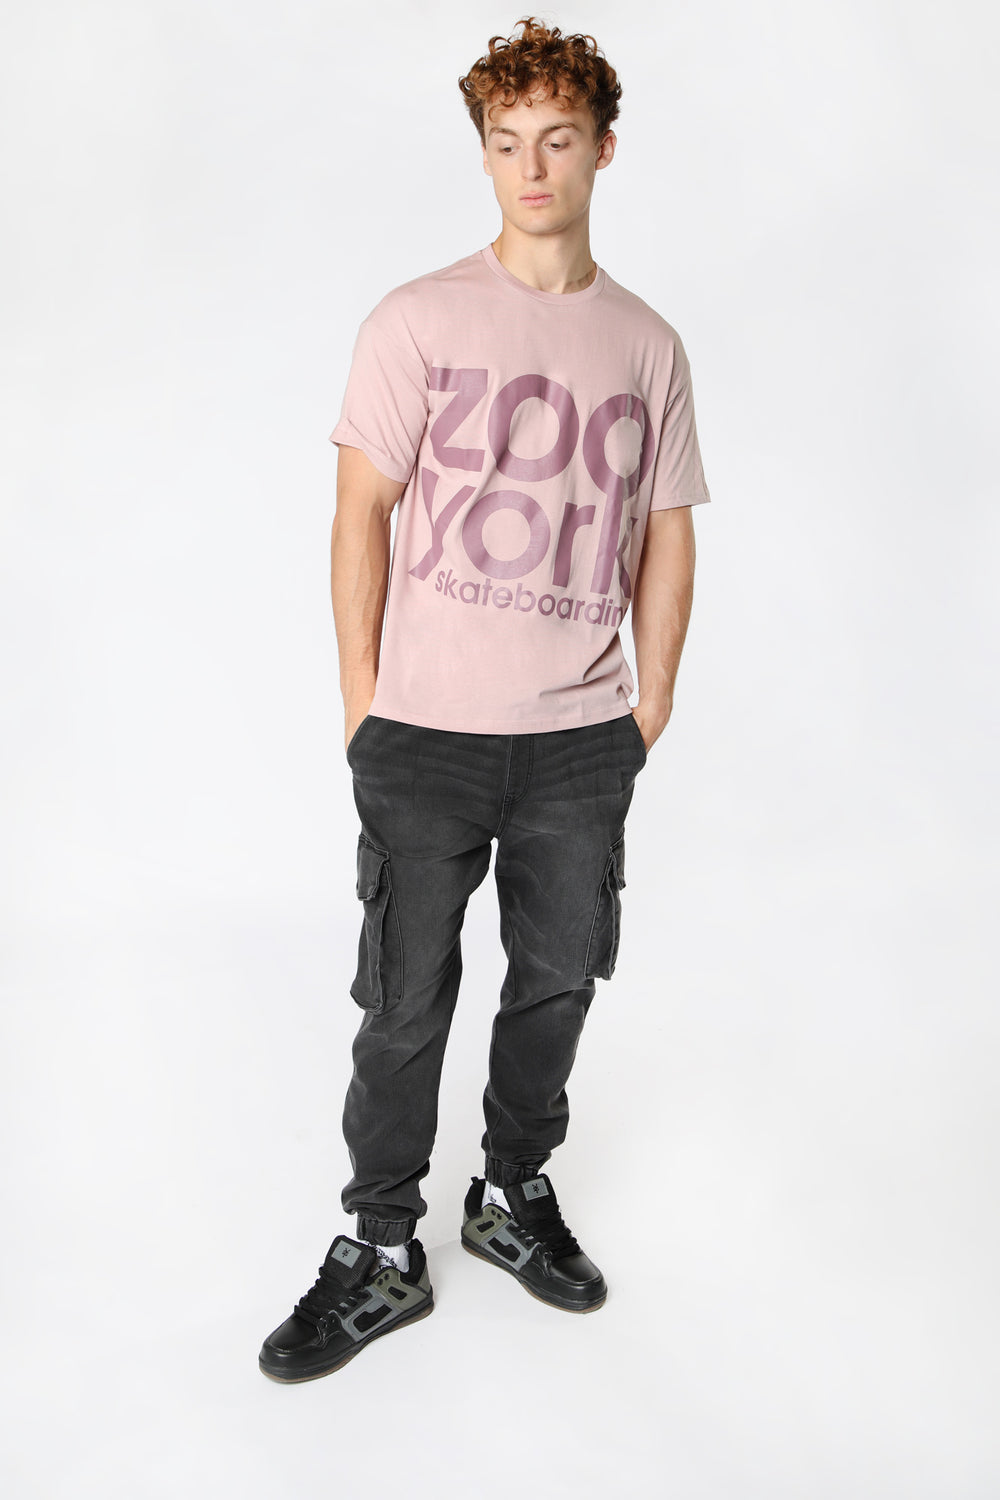 T-Shirt Unisexe Imprimé Grand Logo Zoo York Skateboarding Lilas